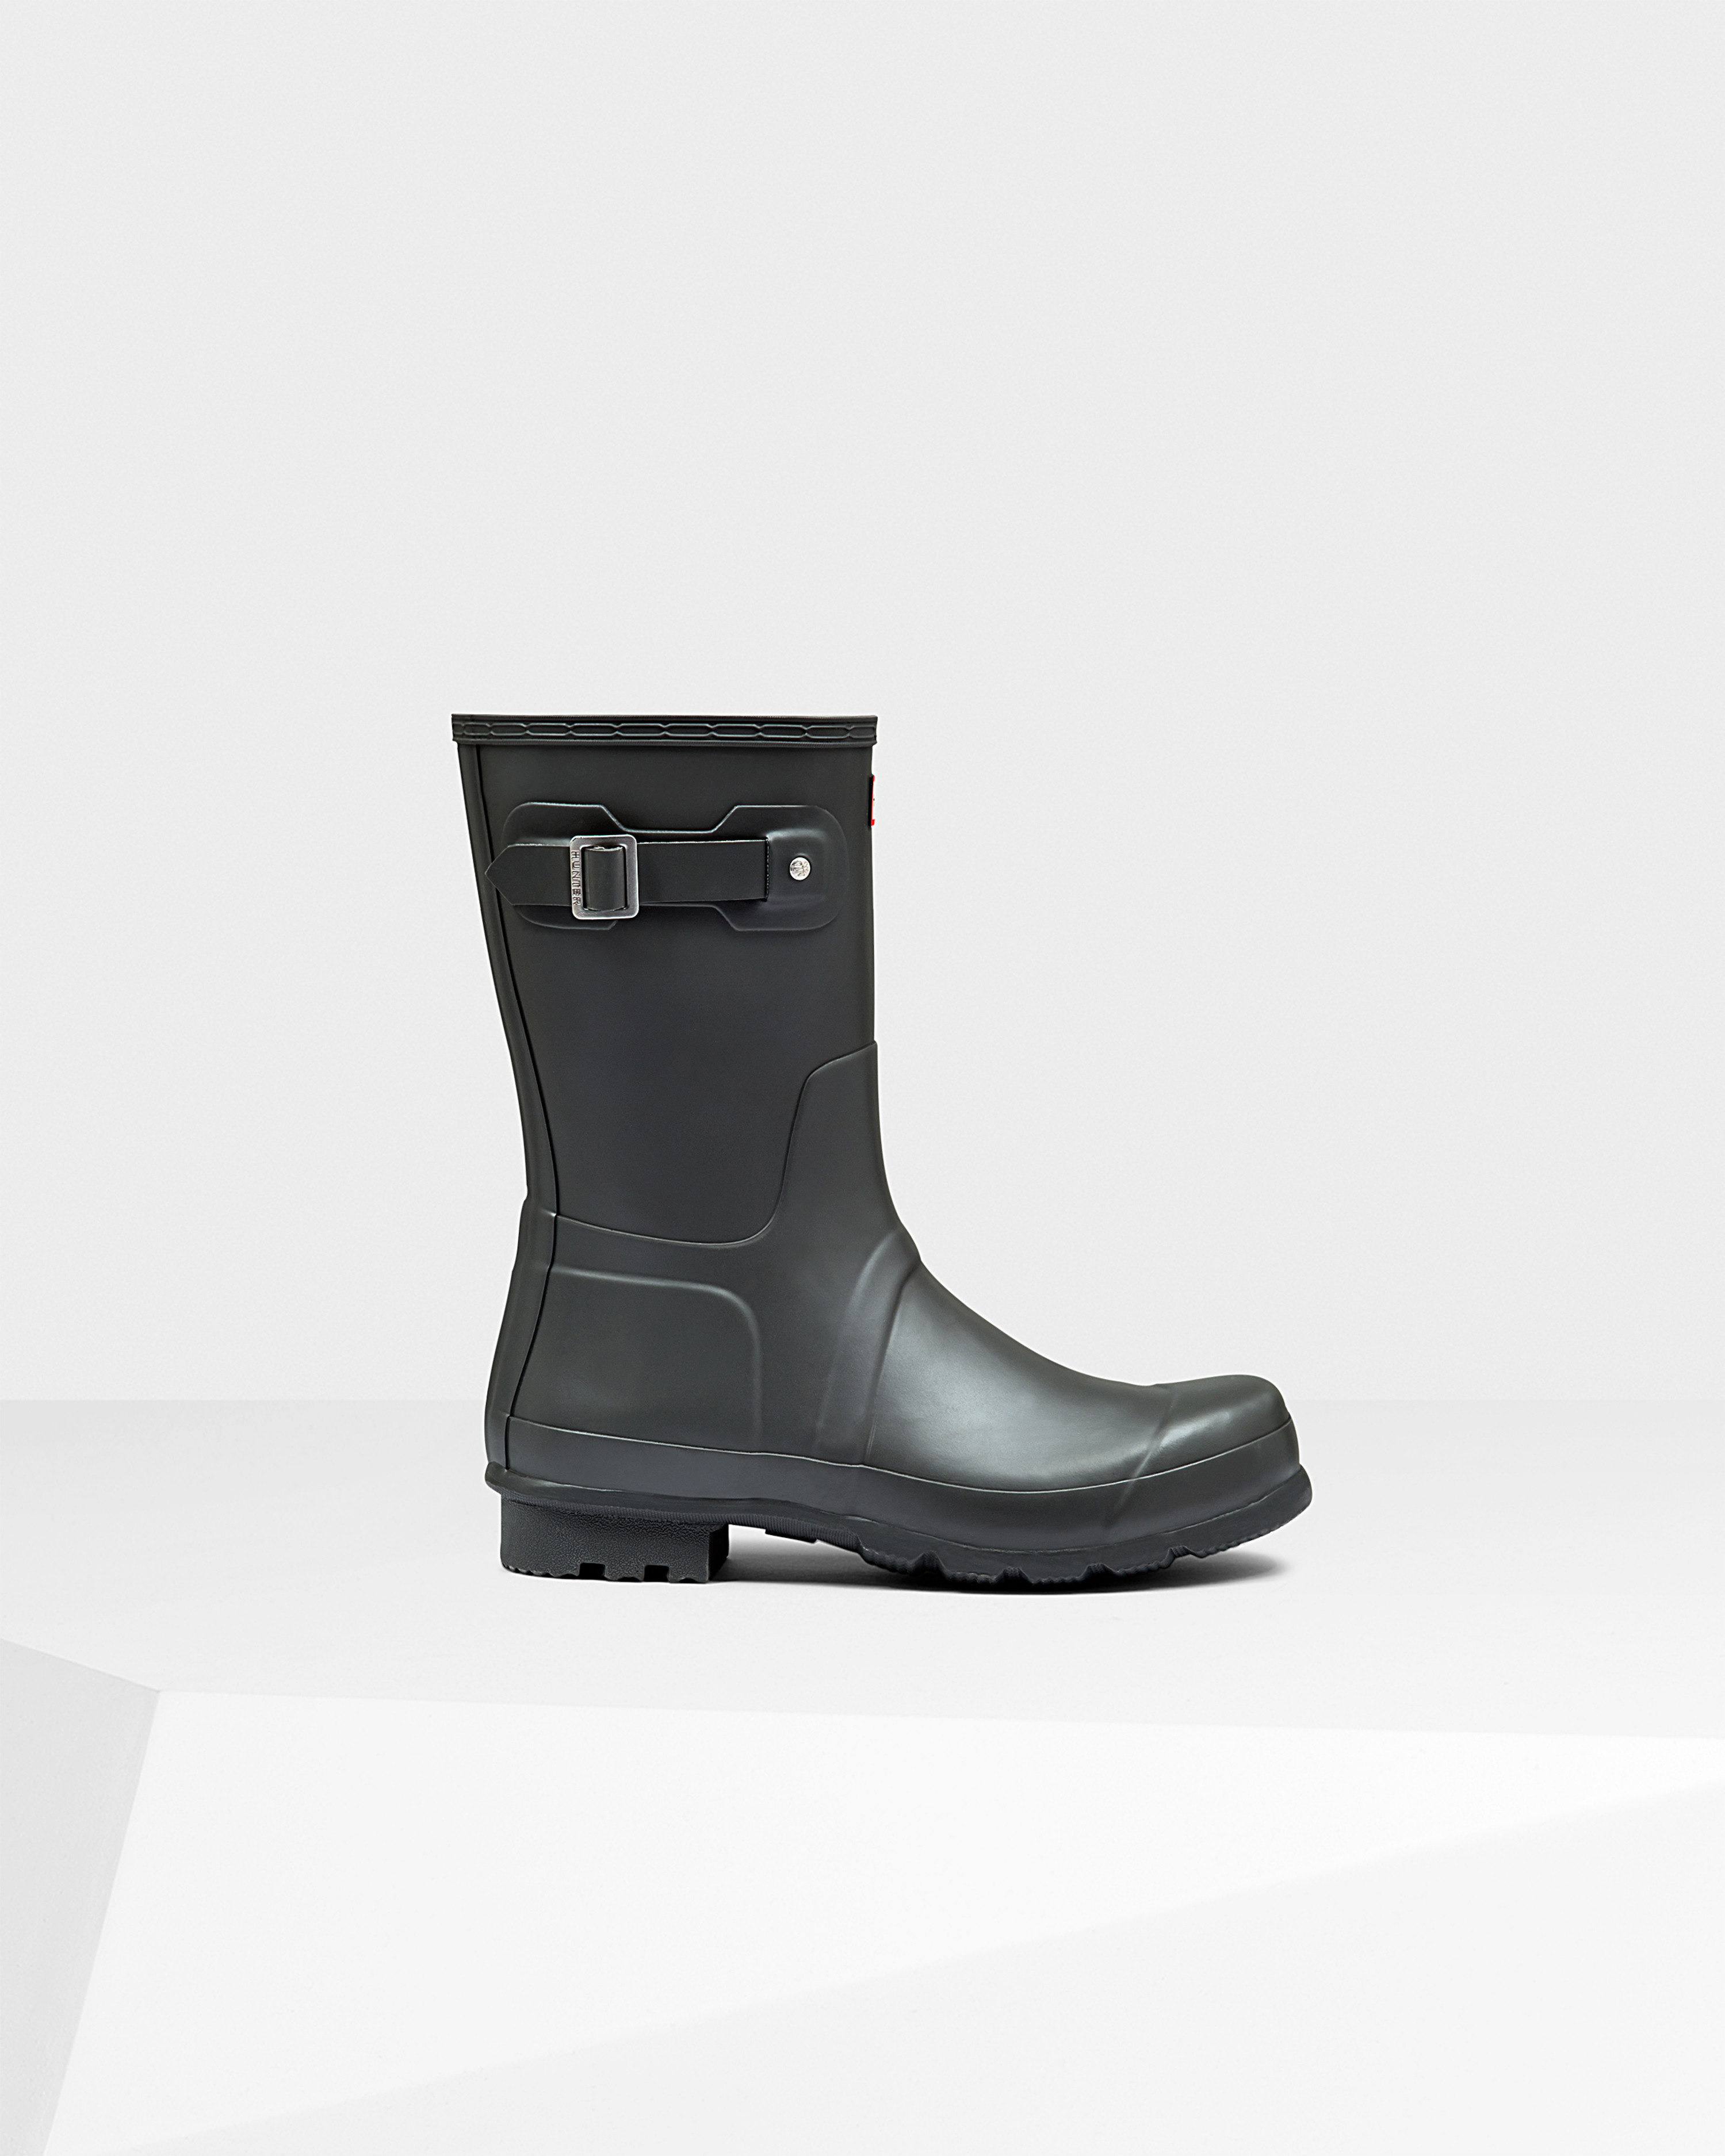 Lyst - HUNTER Men's Original Short Rain Boots in Gray for Men